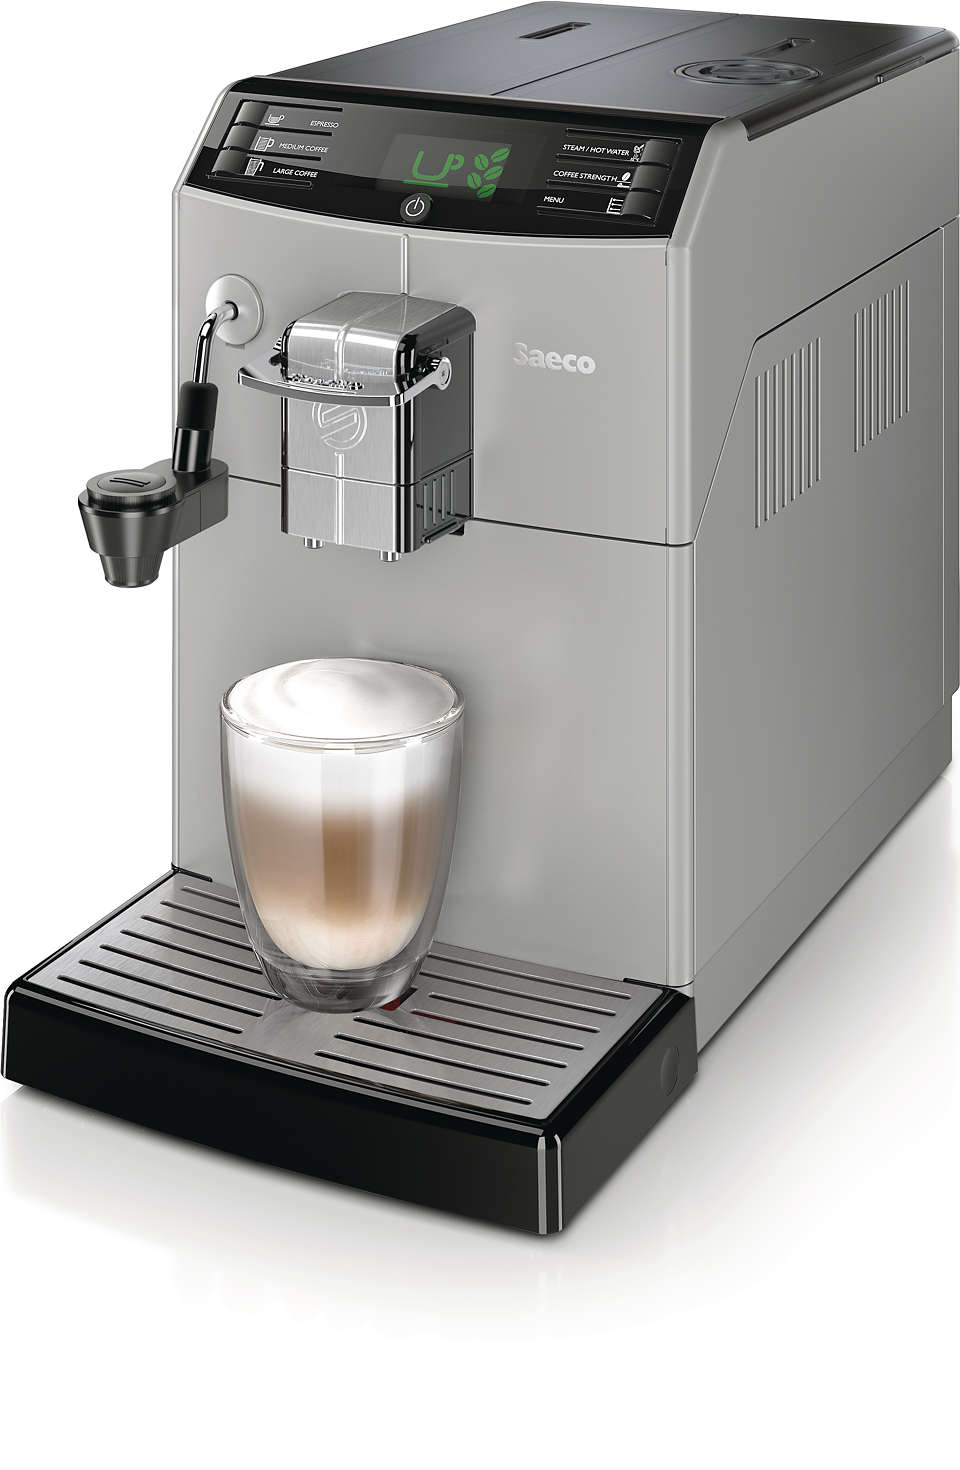 Fruitful arrive the first Minuto Super-automatic espresso machine HD8772/47 | Saeco